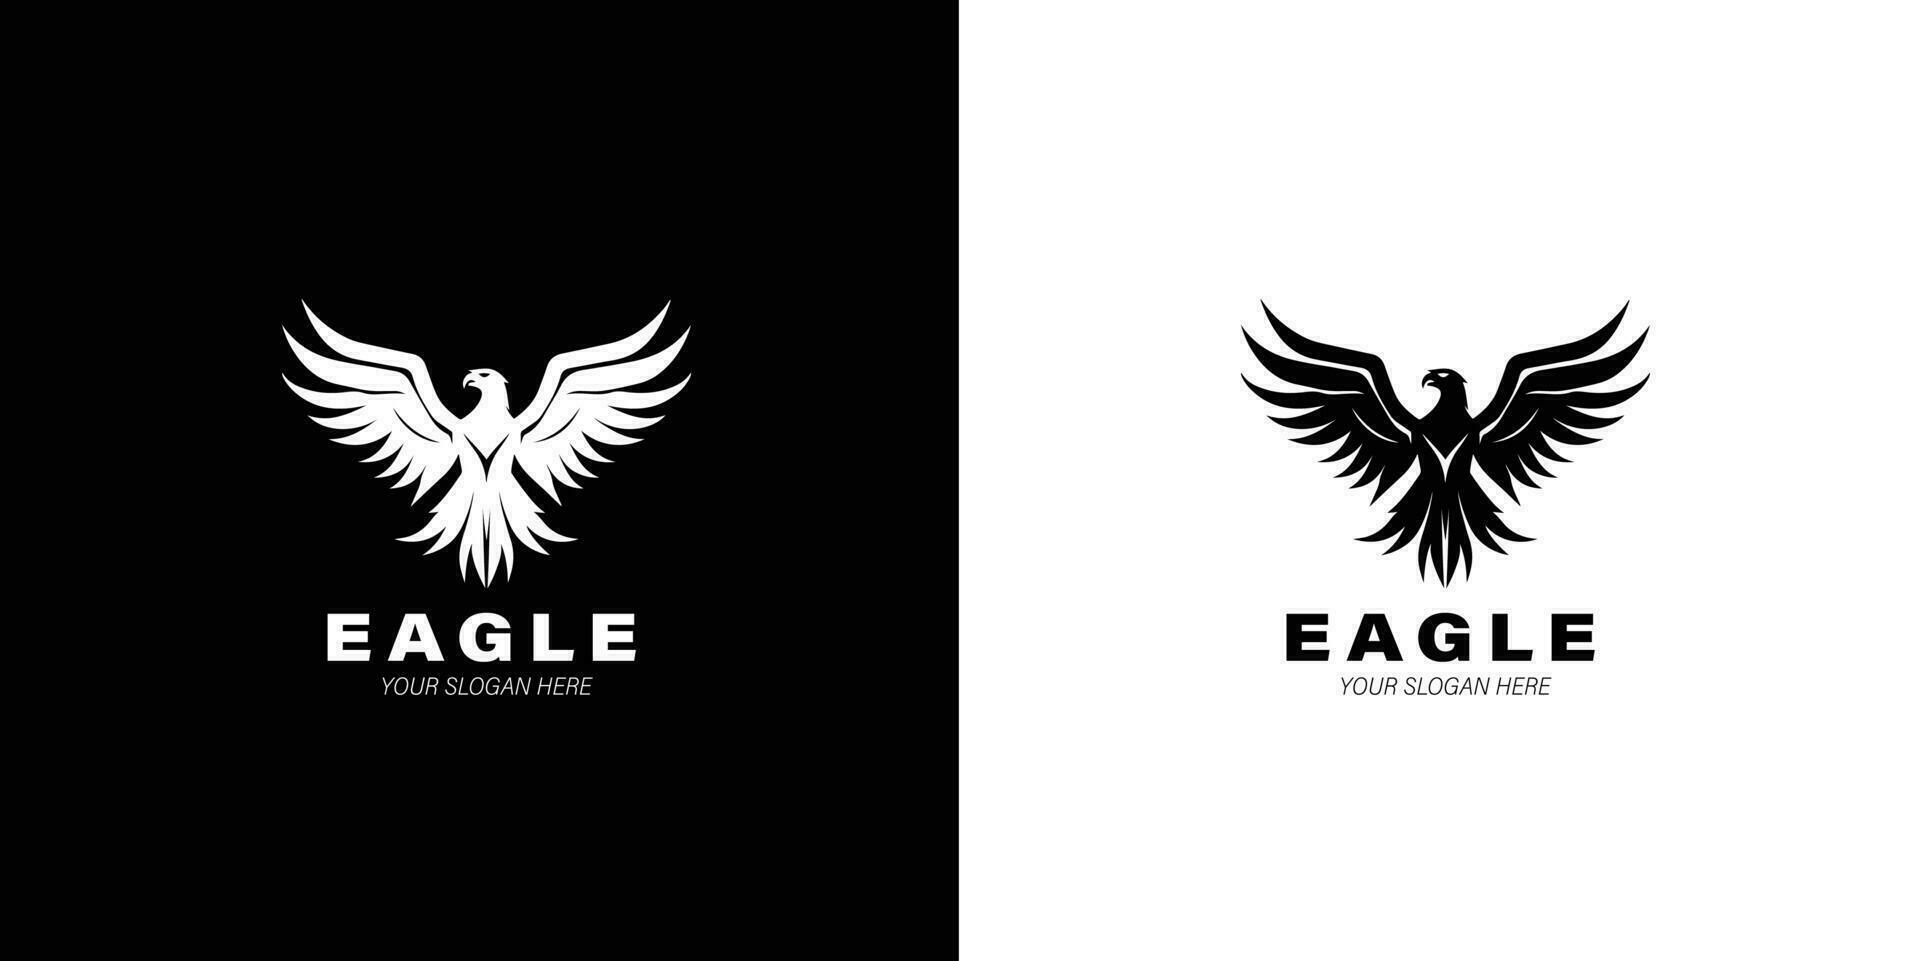 Eagle logo black and white vector